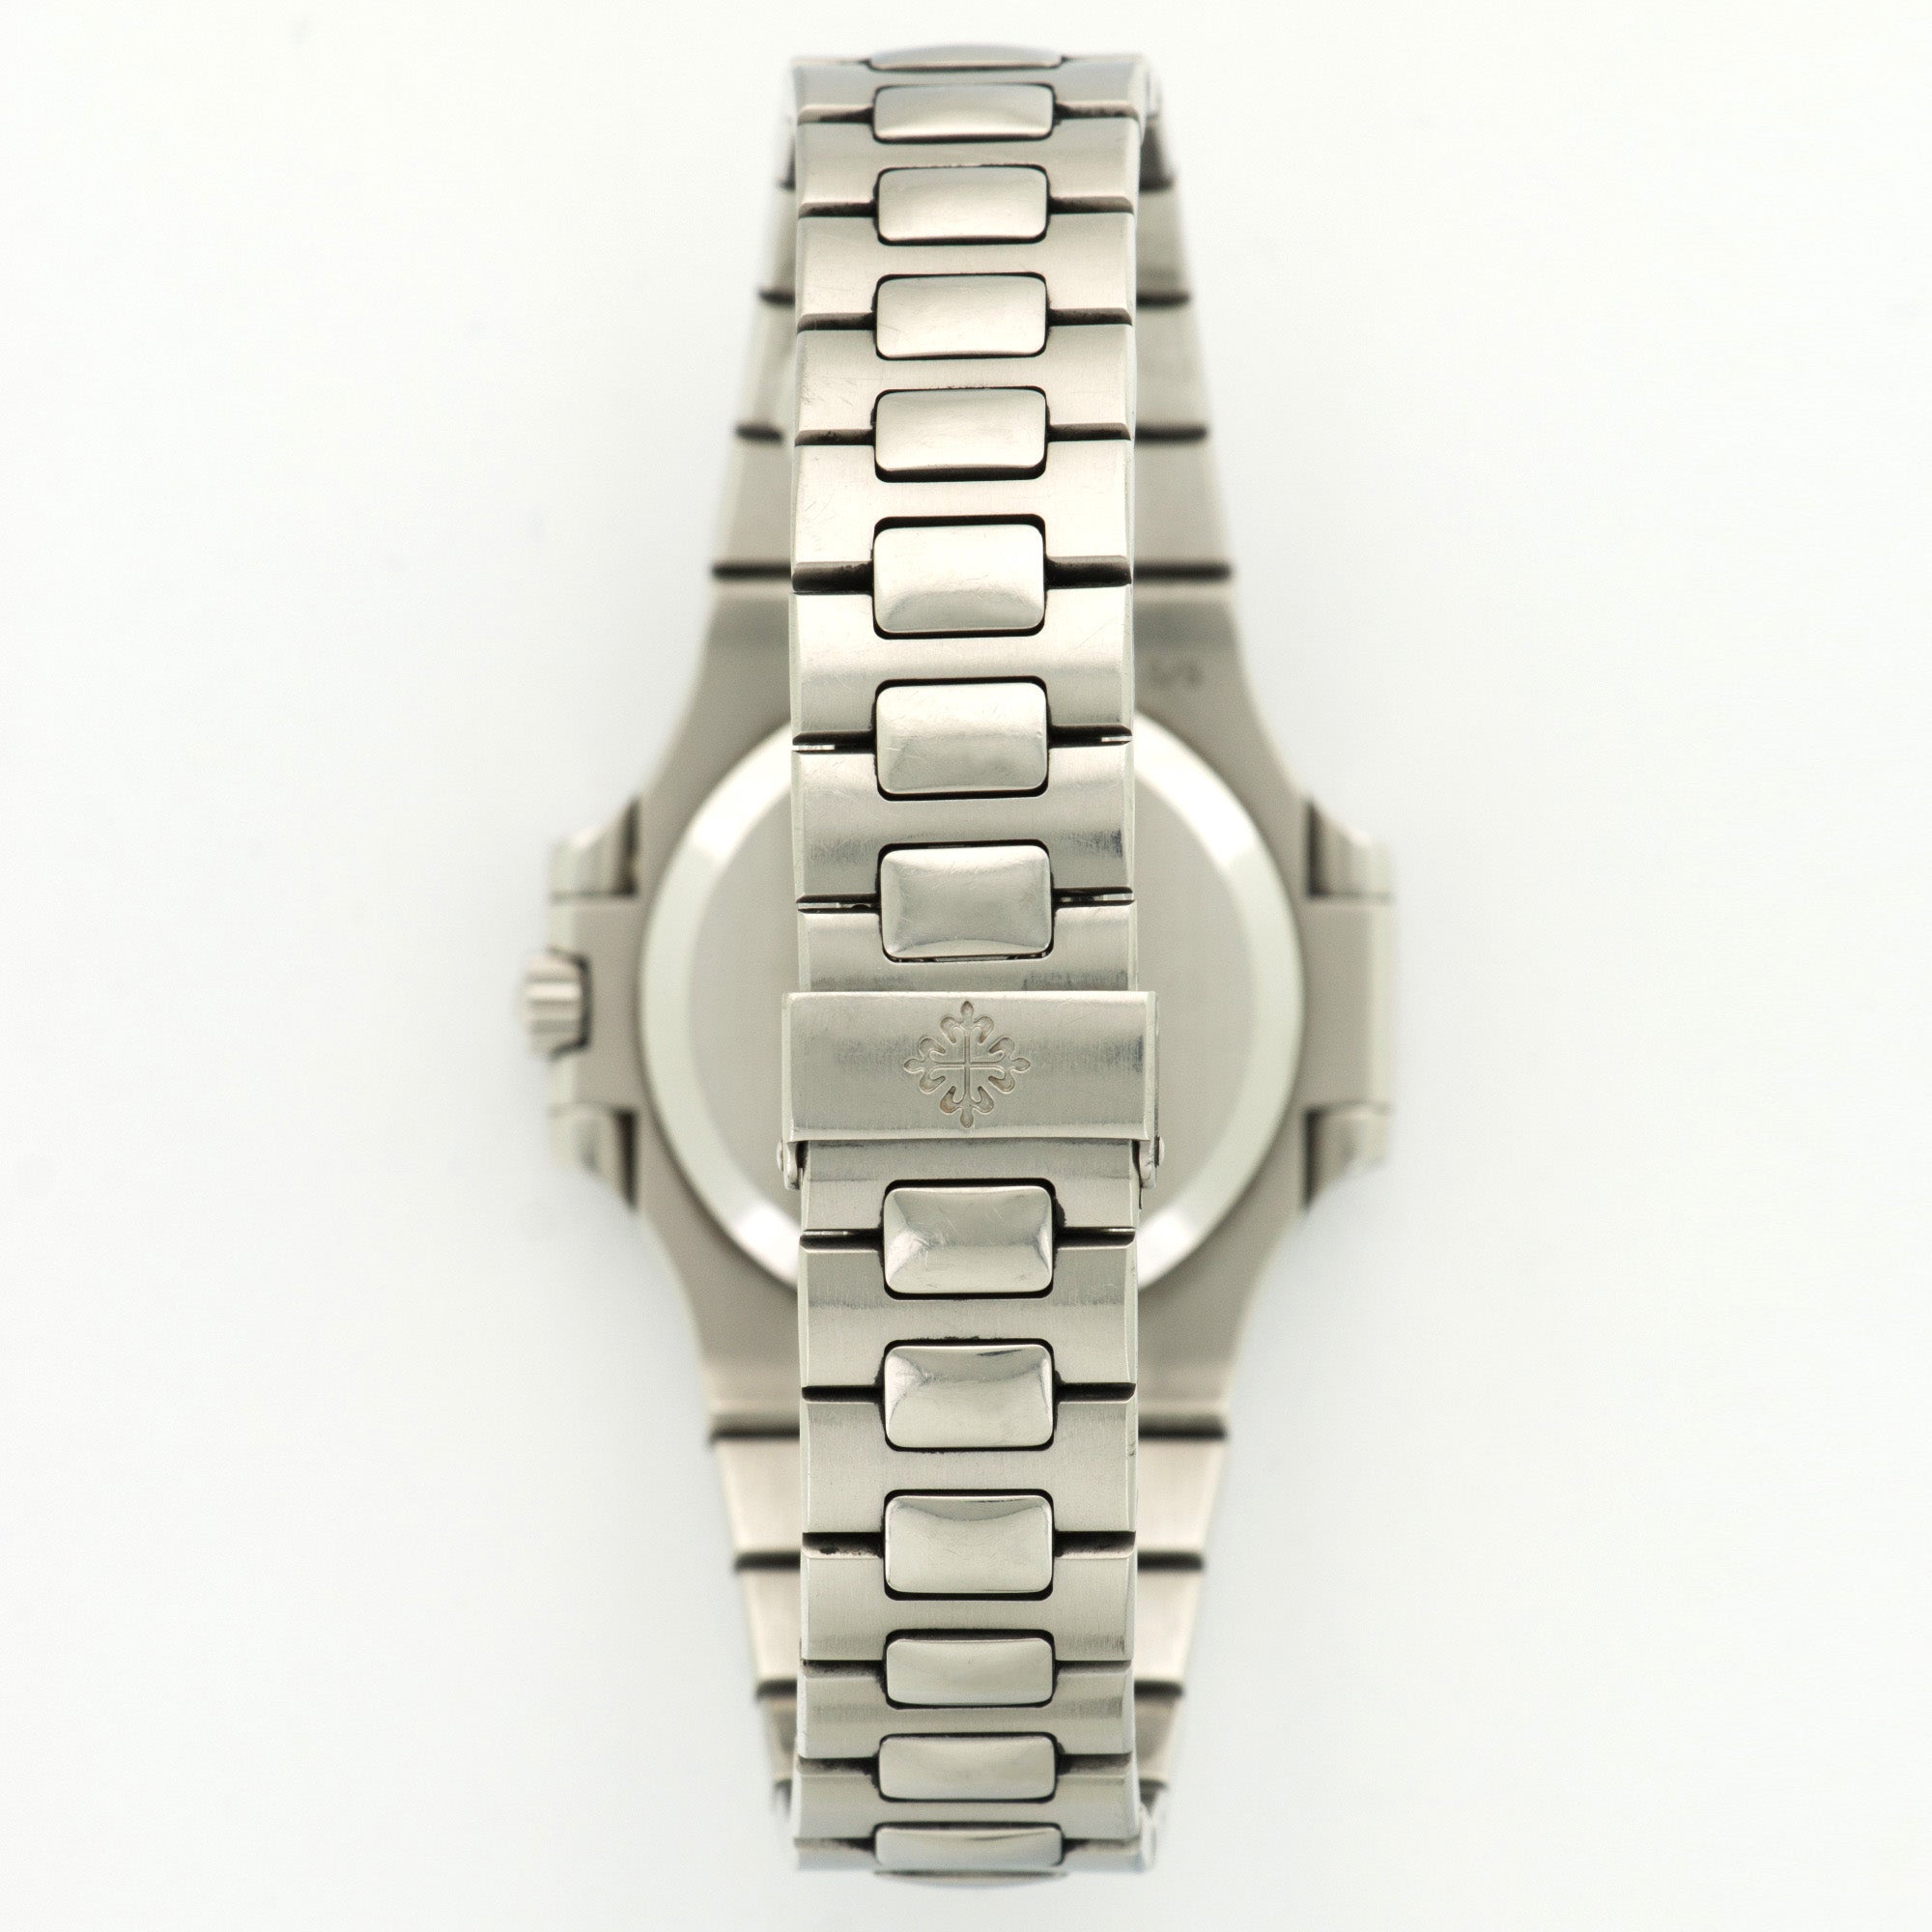 Patek Philippe - Patek Philippe Steel Nautilus Watch Ref. 3800/1A with Original Paper - The Keystone Watches